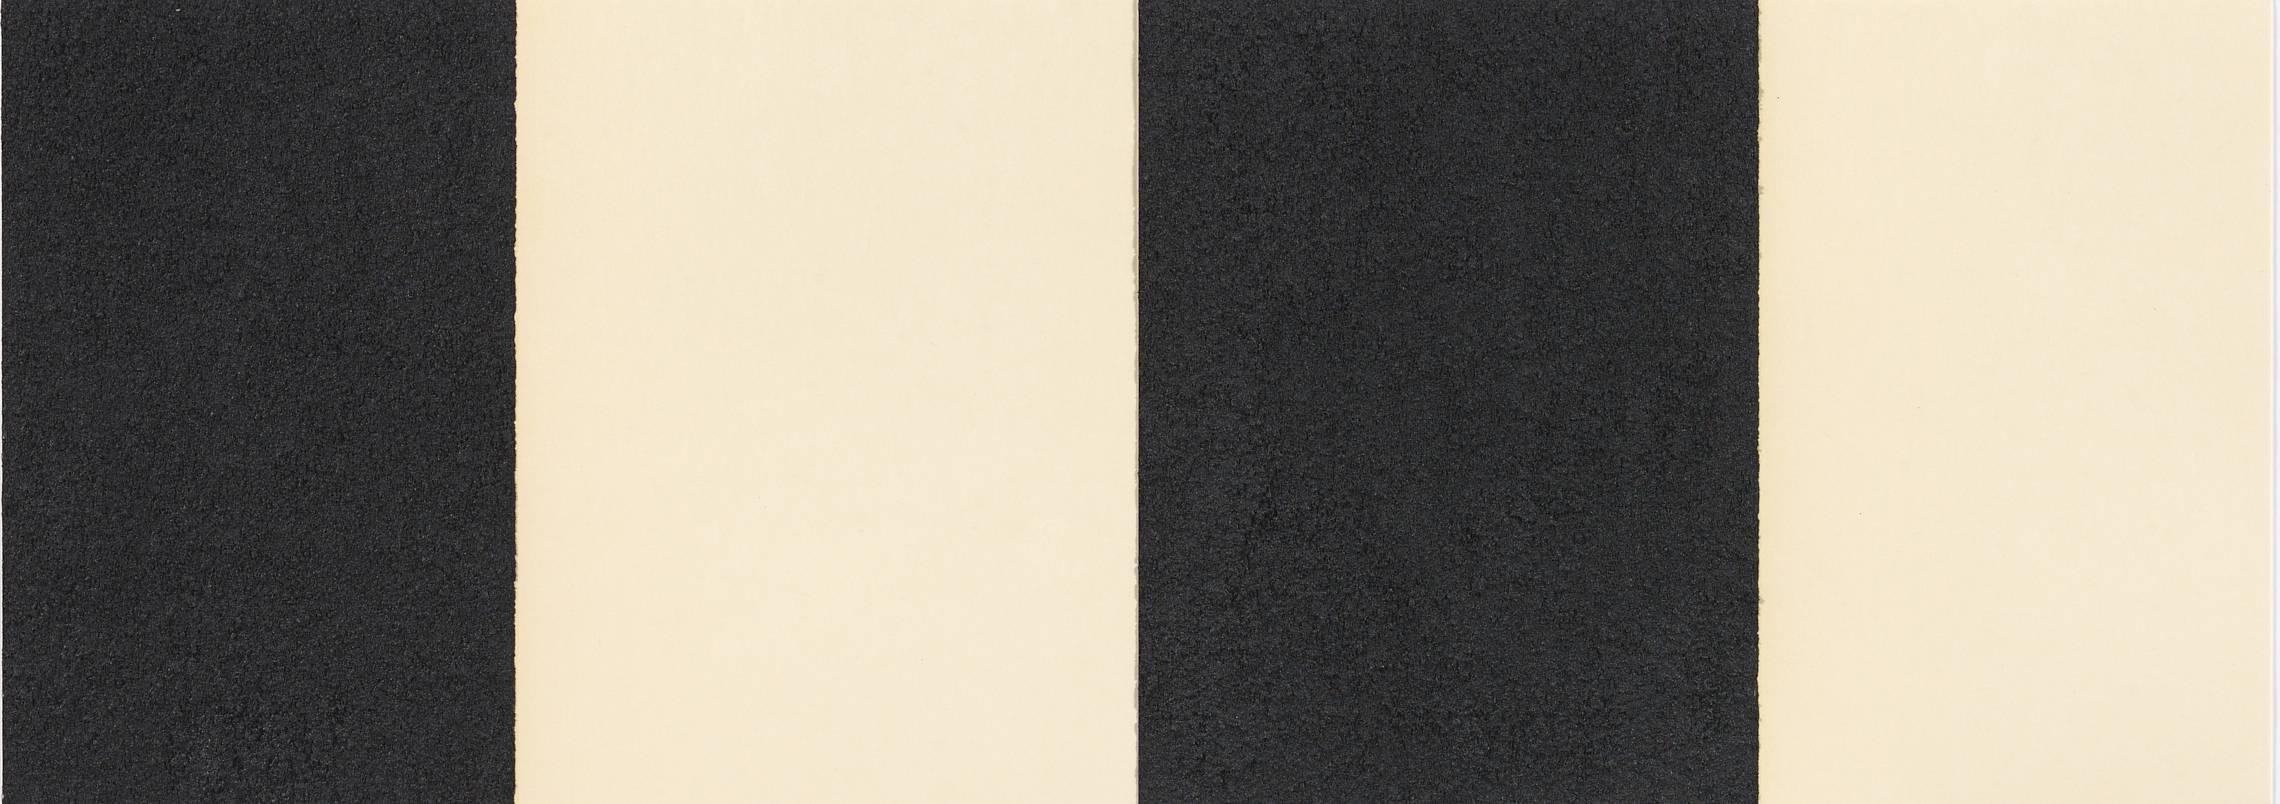 Richard Serra Abstract Print - Horizontal Reversal VII